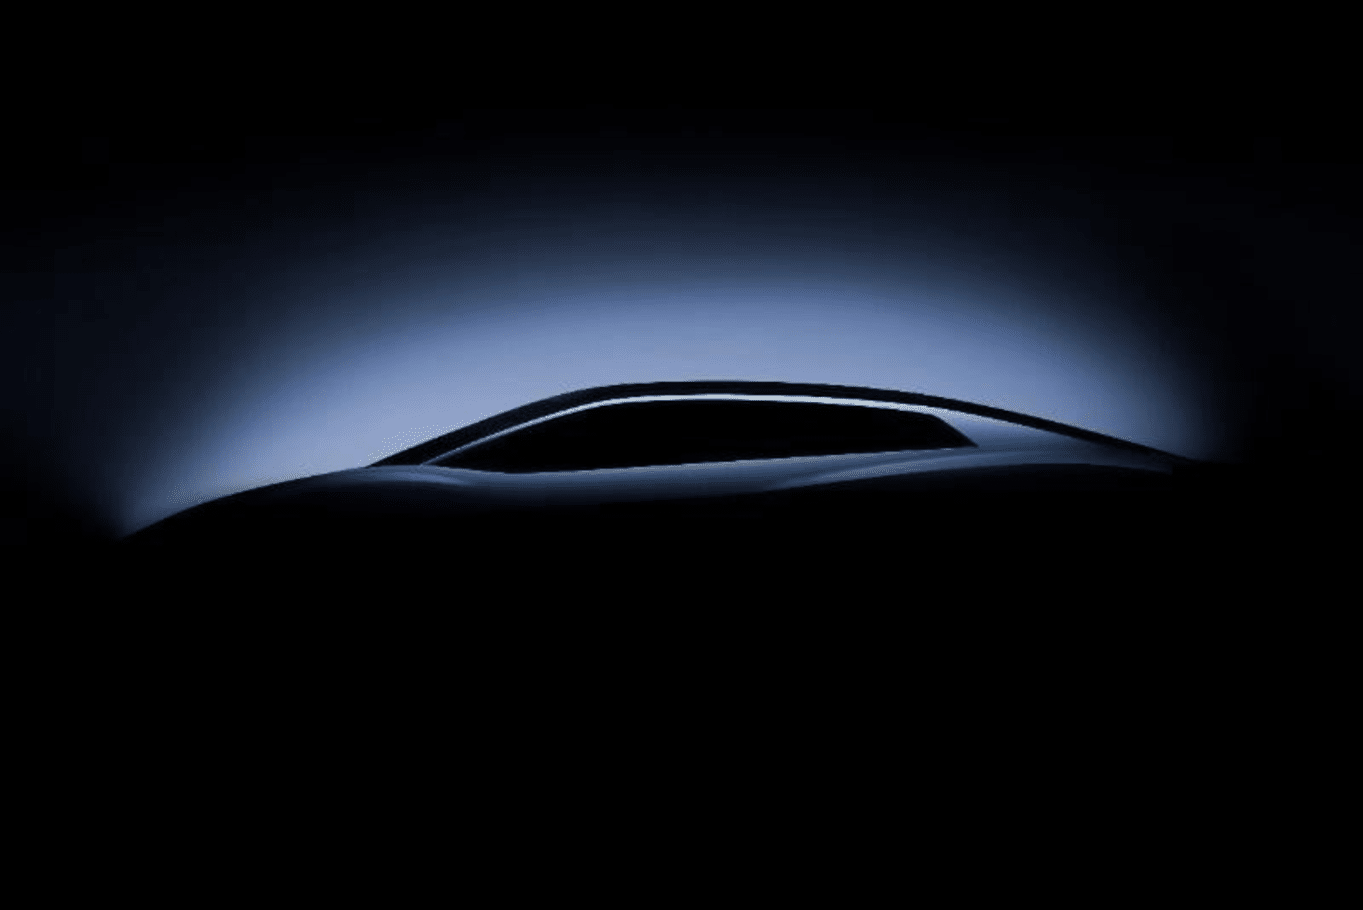 Lamborghini Teases Electric Grand Tourer Concept Ahead of Monterey Car Week